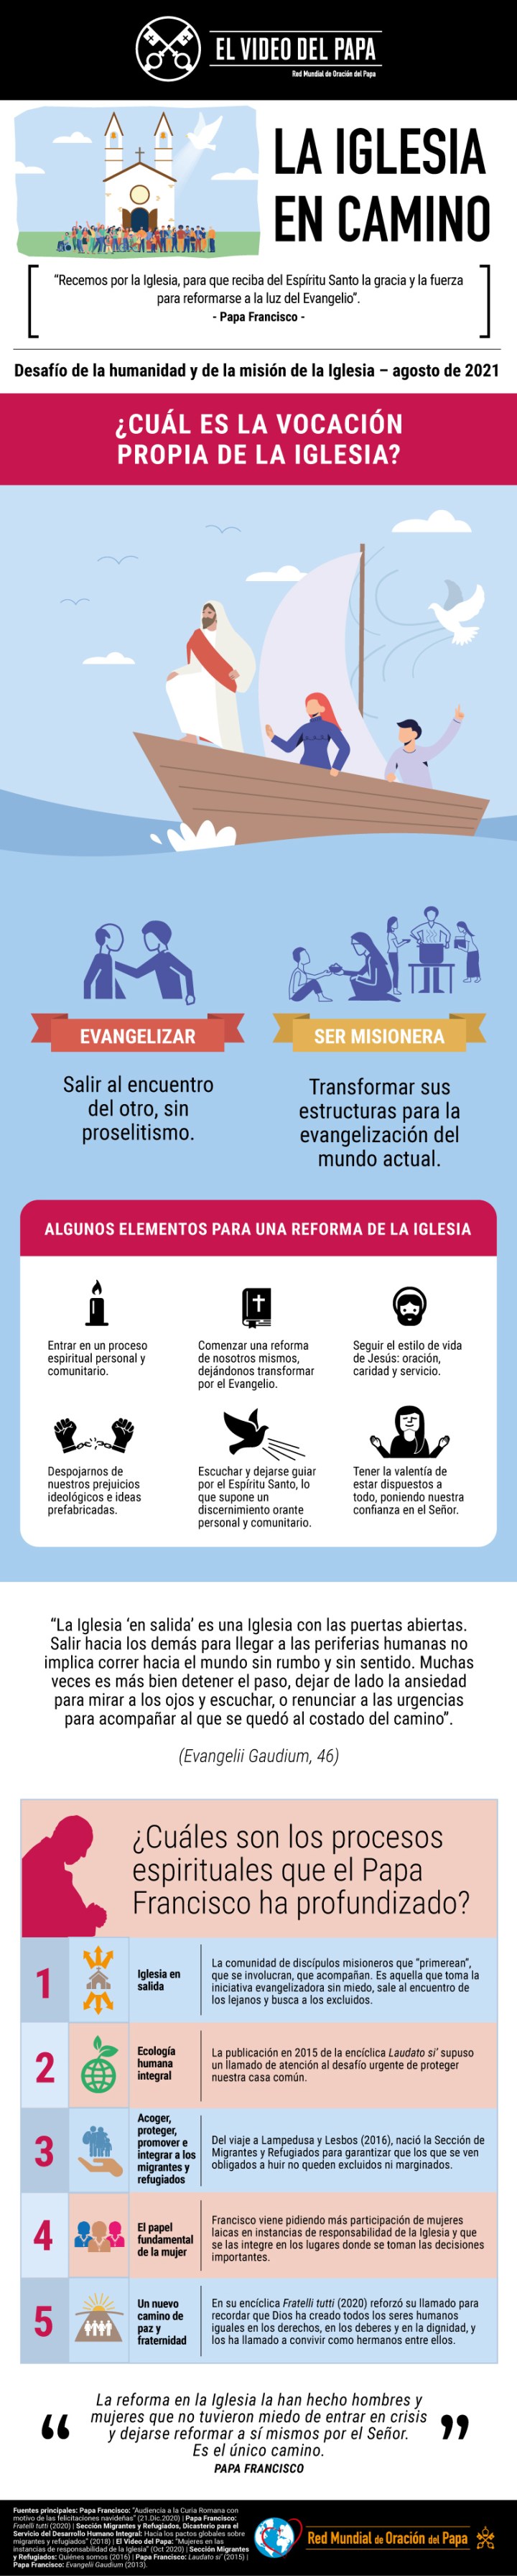 Infografía-TPV-8-2021-ES-La-Iglesia-en-camino.jpg